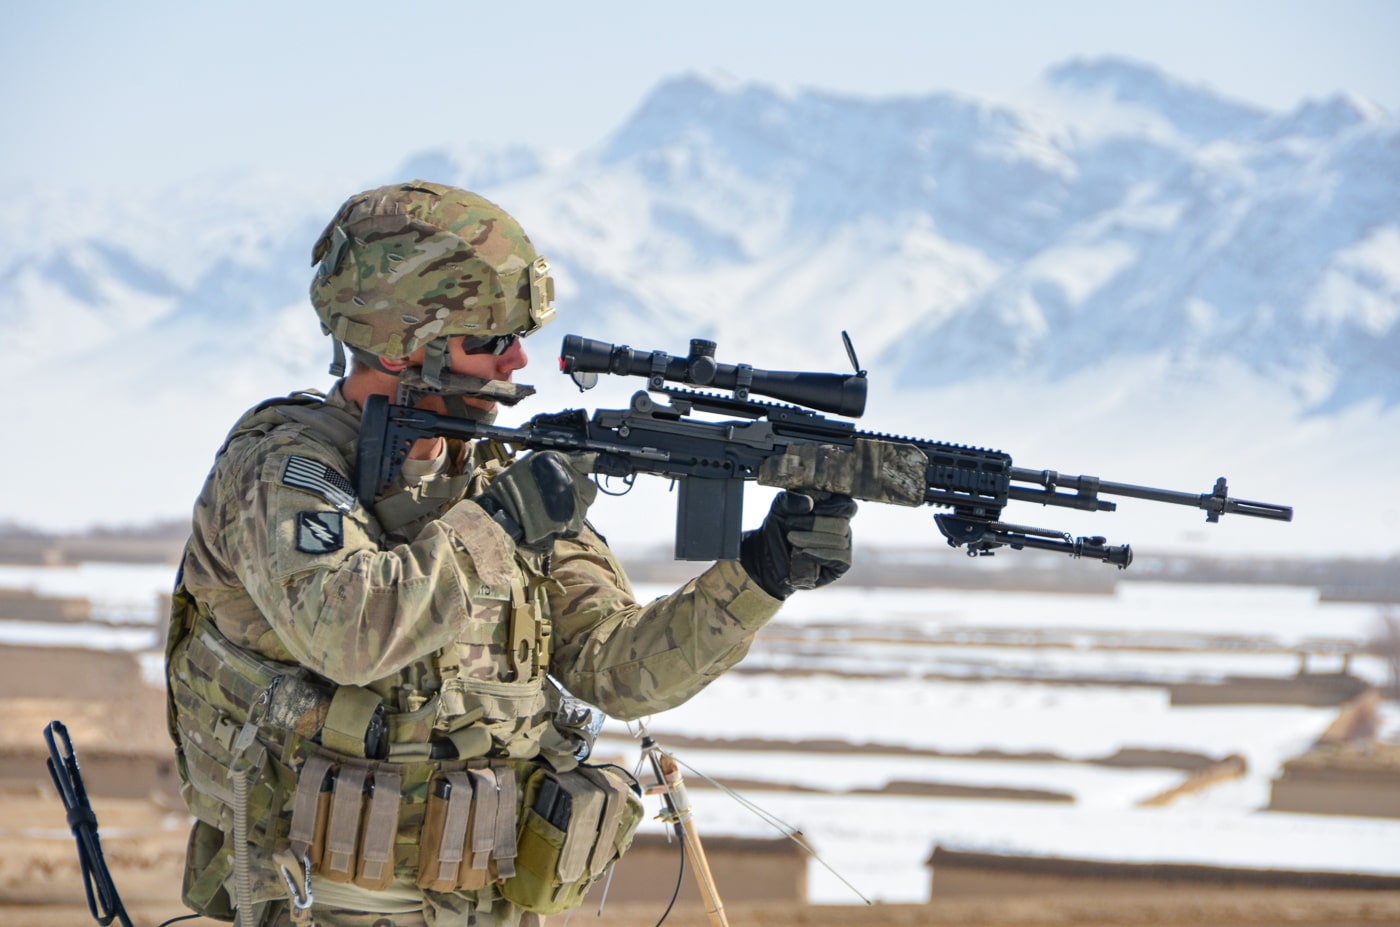 mk 14 enhanced battle rifle in afghanistan